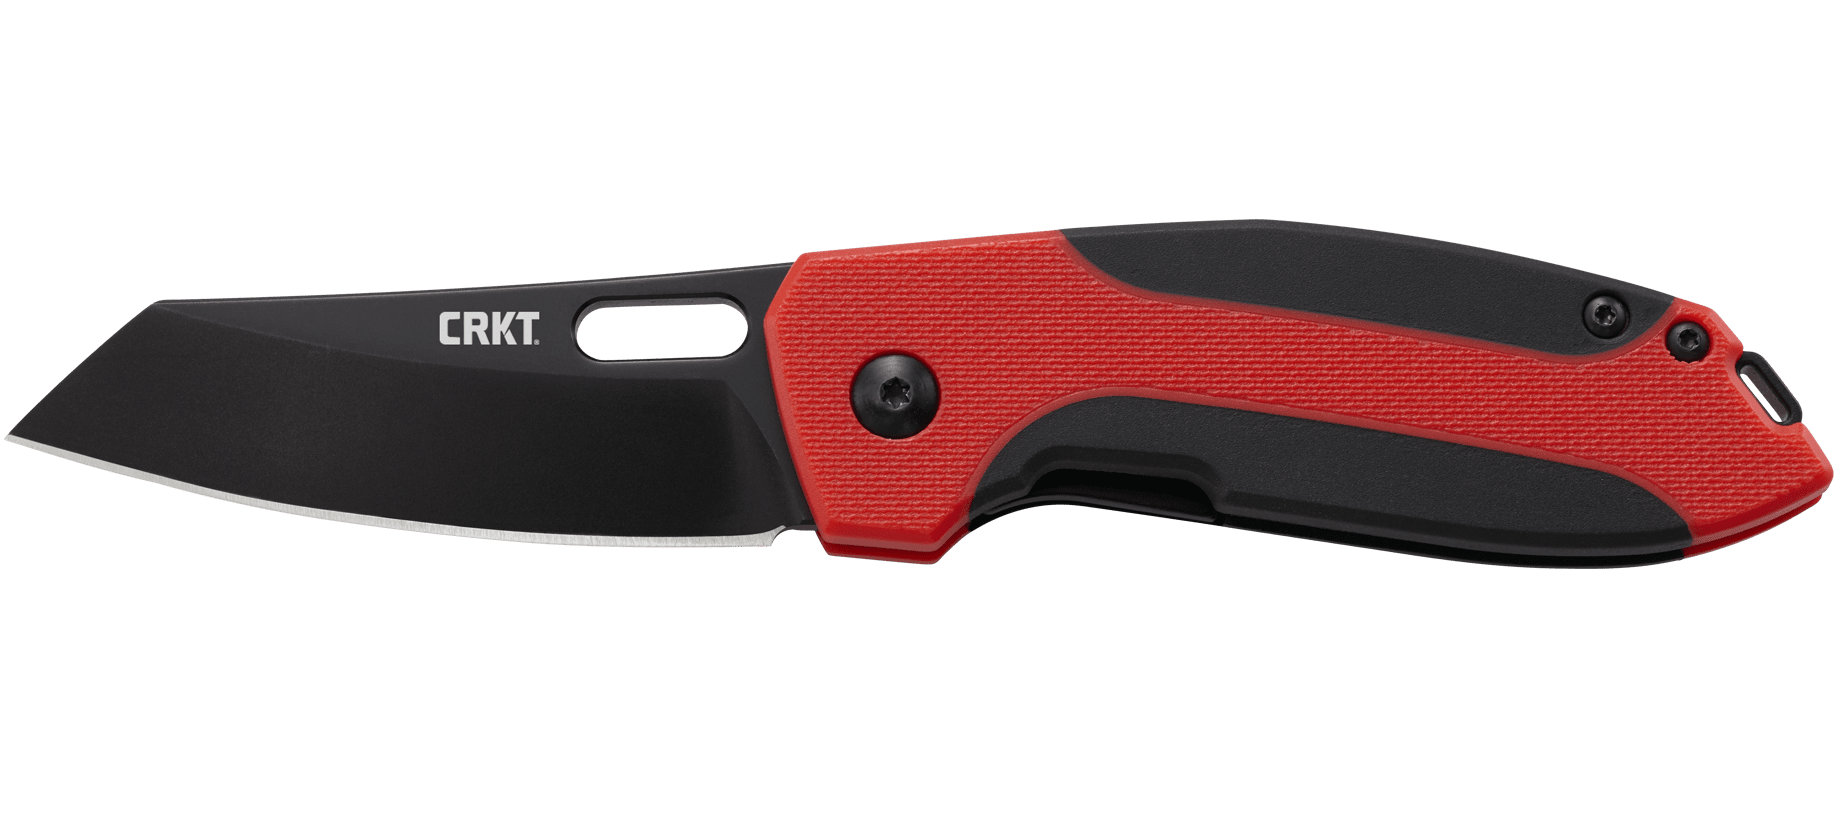 фото Складной нож crkt sketch™ red, сталь 8cr13mov, рукоять abs пластик